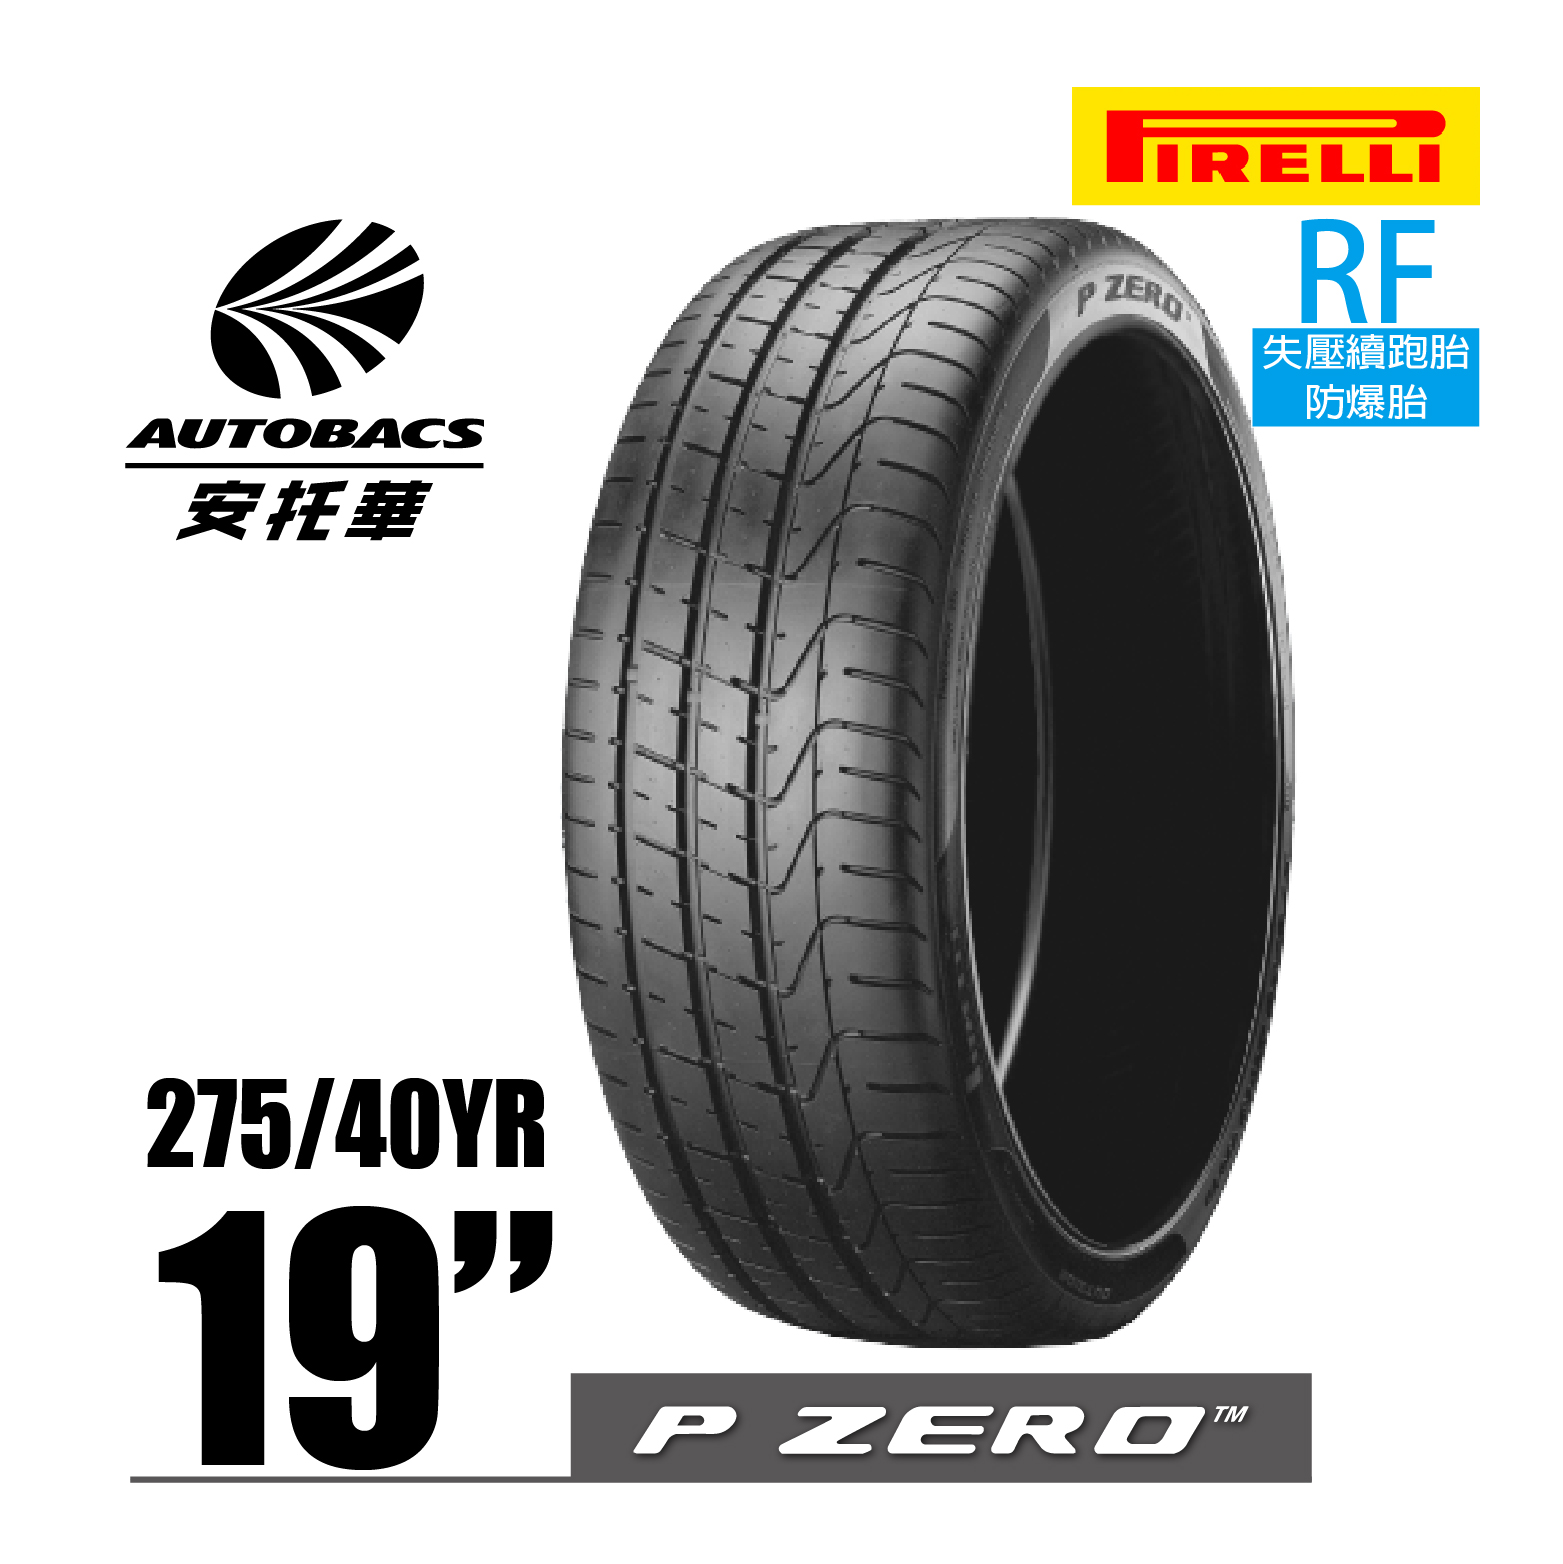 PIRELLI 倍耐力輪胎 P-ZERO – 275/40/19 RF失壓續跑胎/防爆胎/跑車胎/轎車胎/轎跑胎 一入